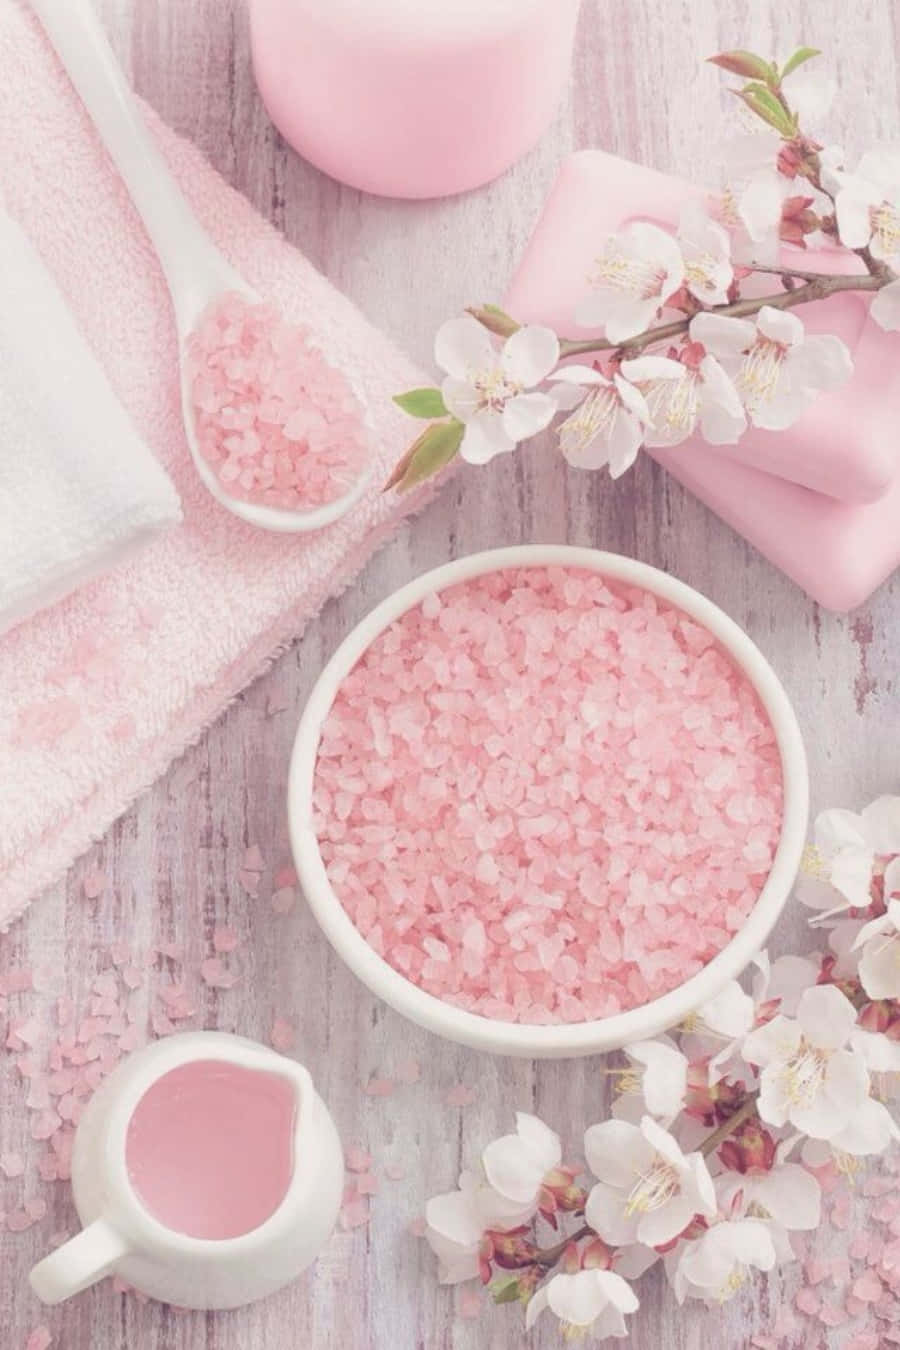 A dreamy pastel pink aesthetic scene